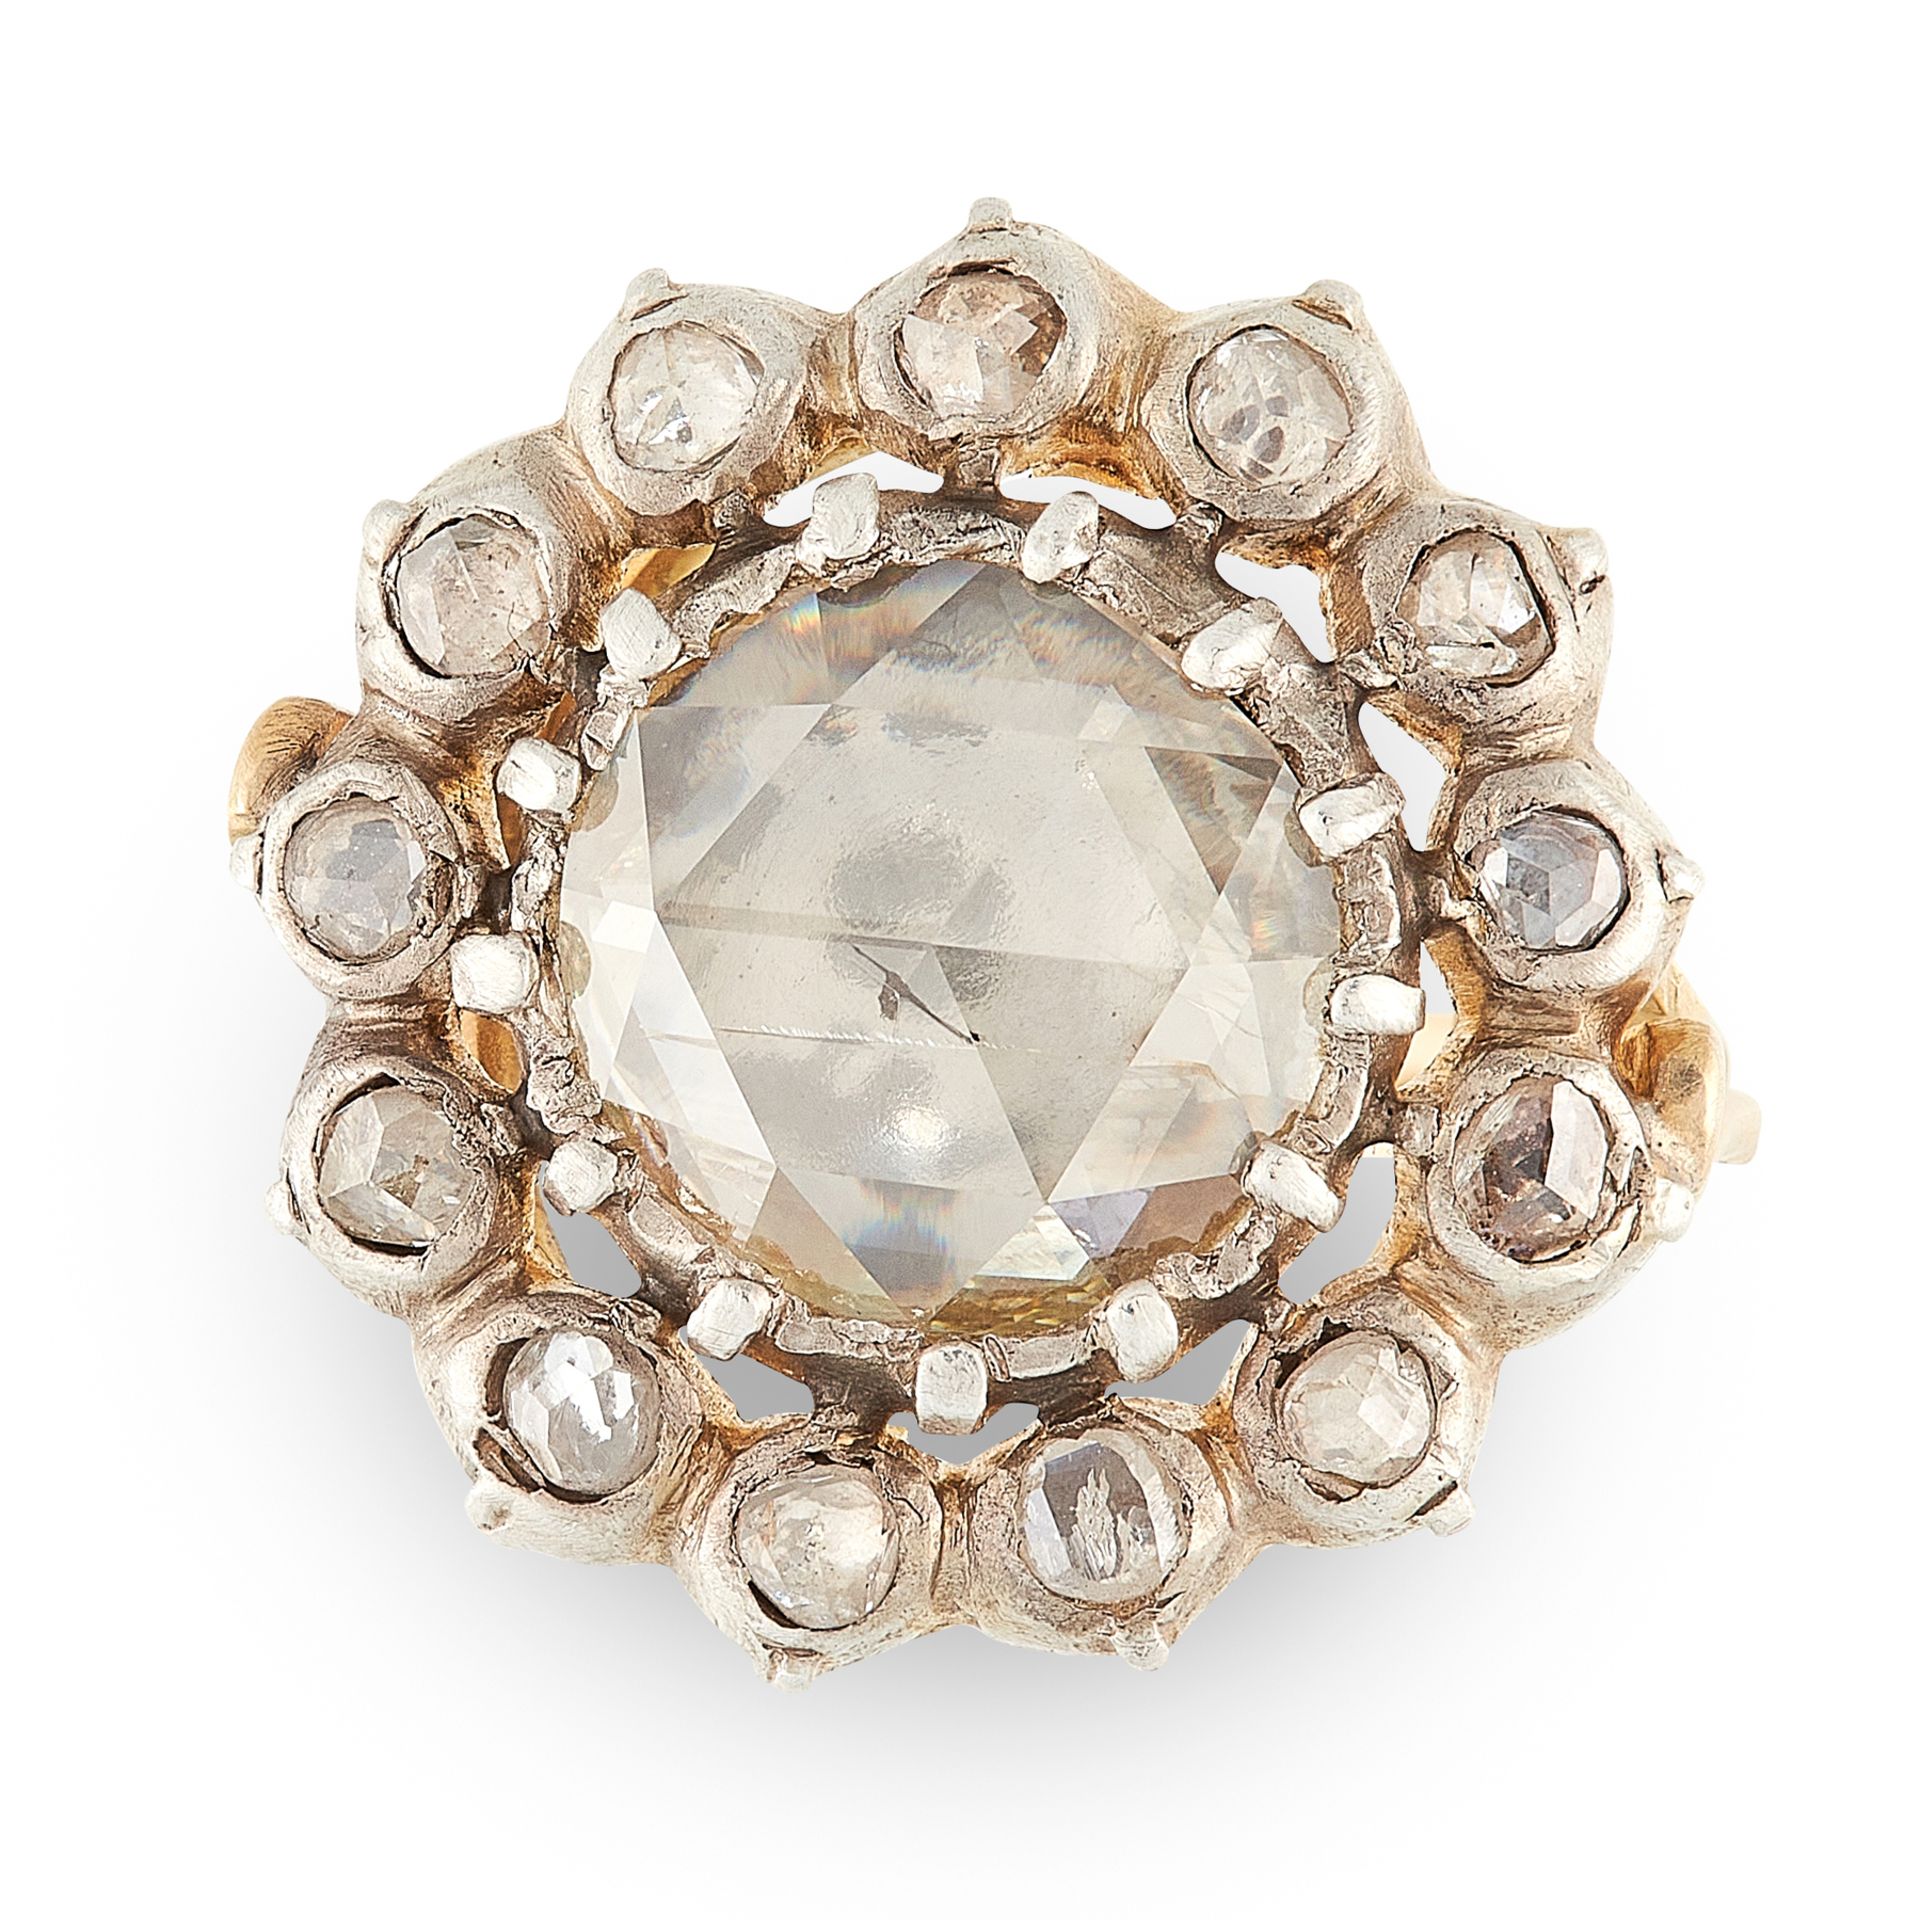 AN ANTIQUE GEORGIAN DIAMOND CLUSTER RING in high carat yellow gold, set with rose cut diamonds